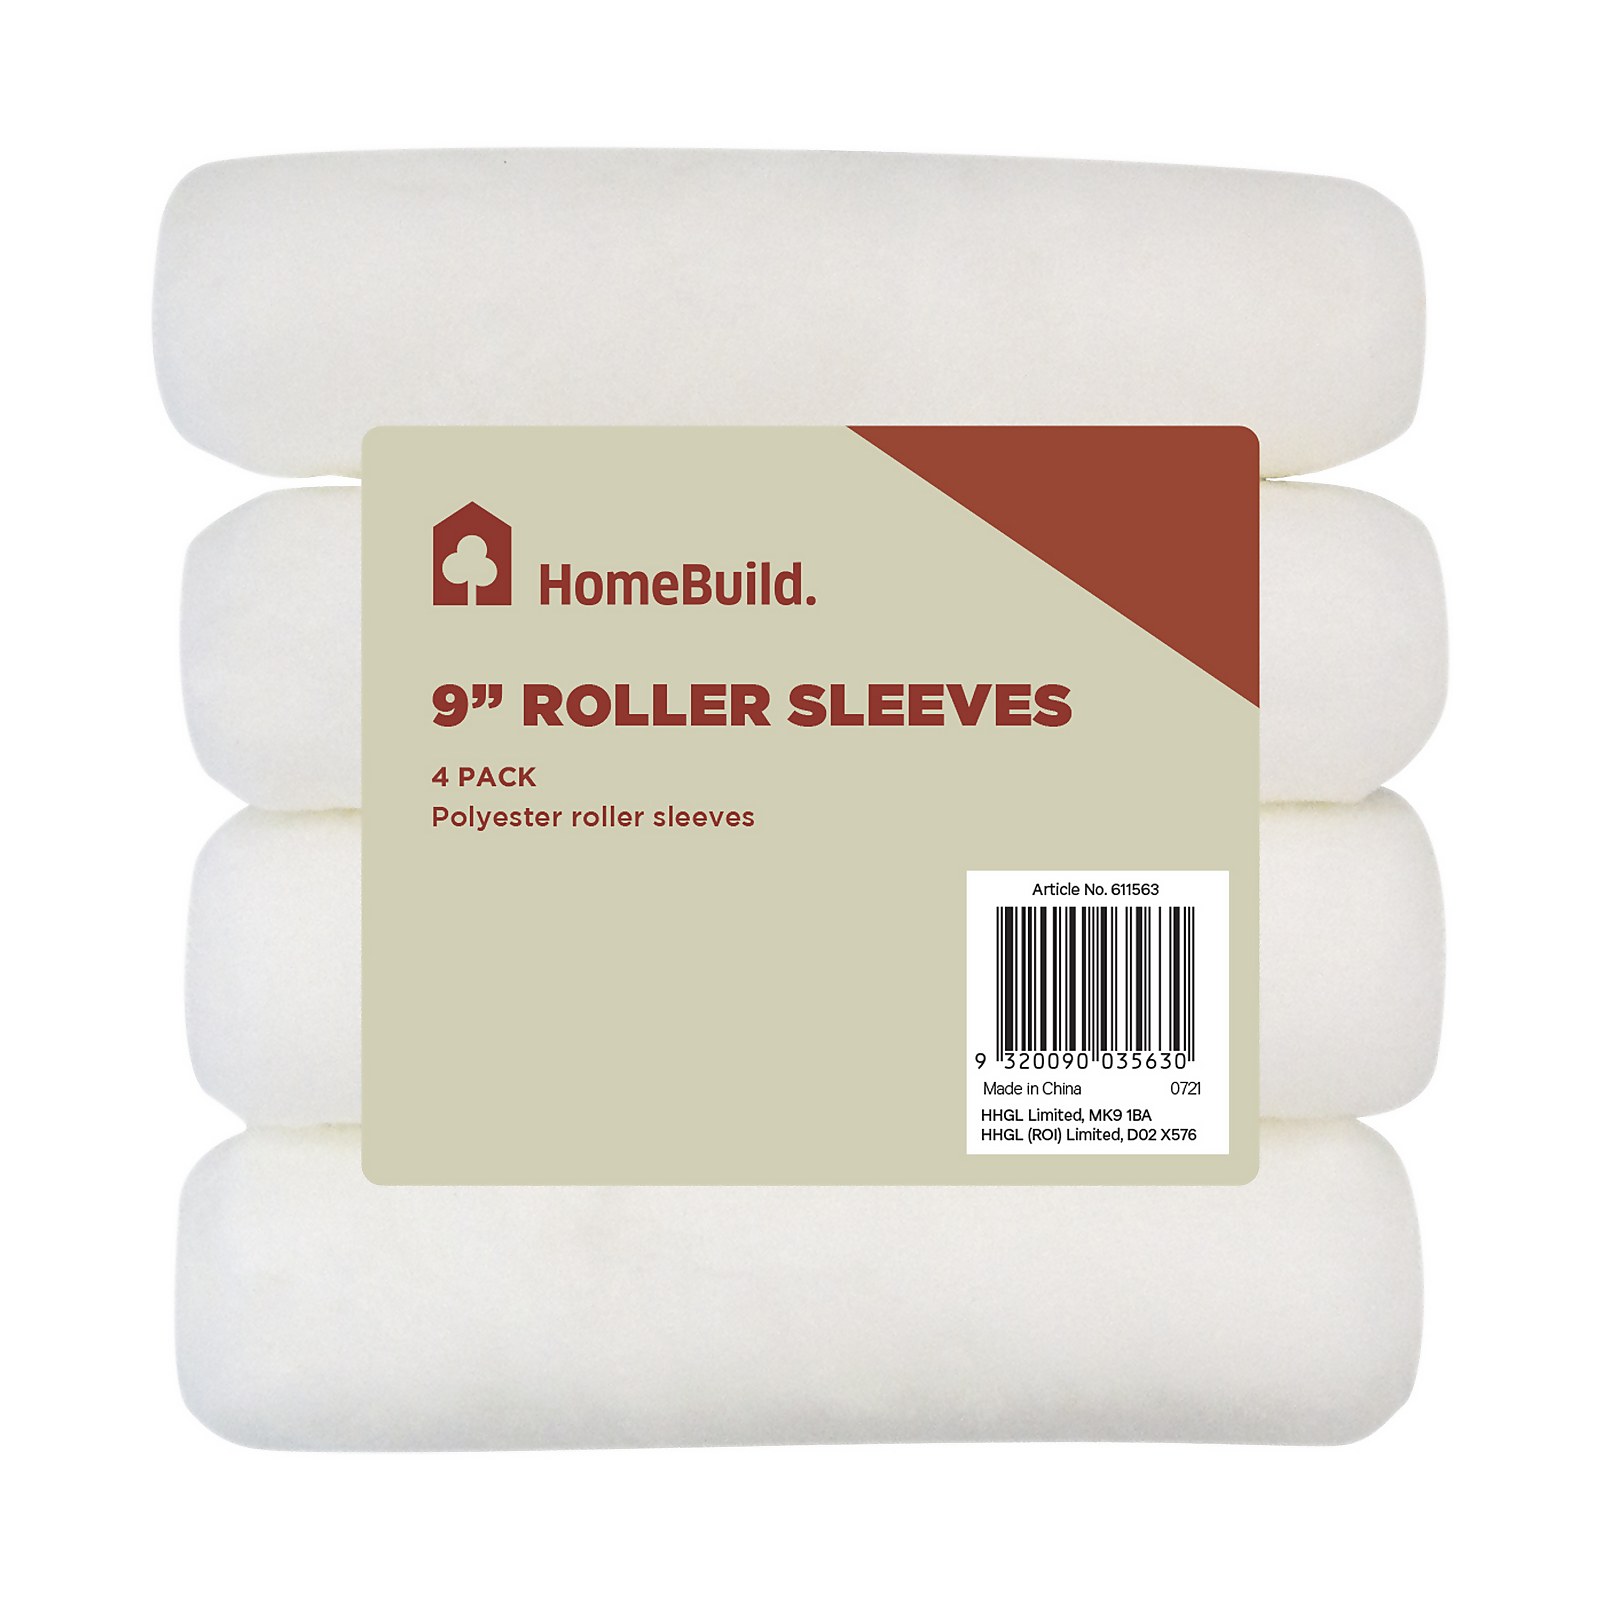 Photo of Homebuild 9 Roller Sleeve - 4 Pack